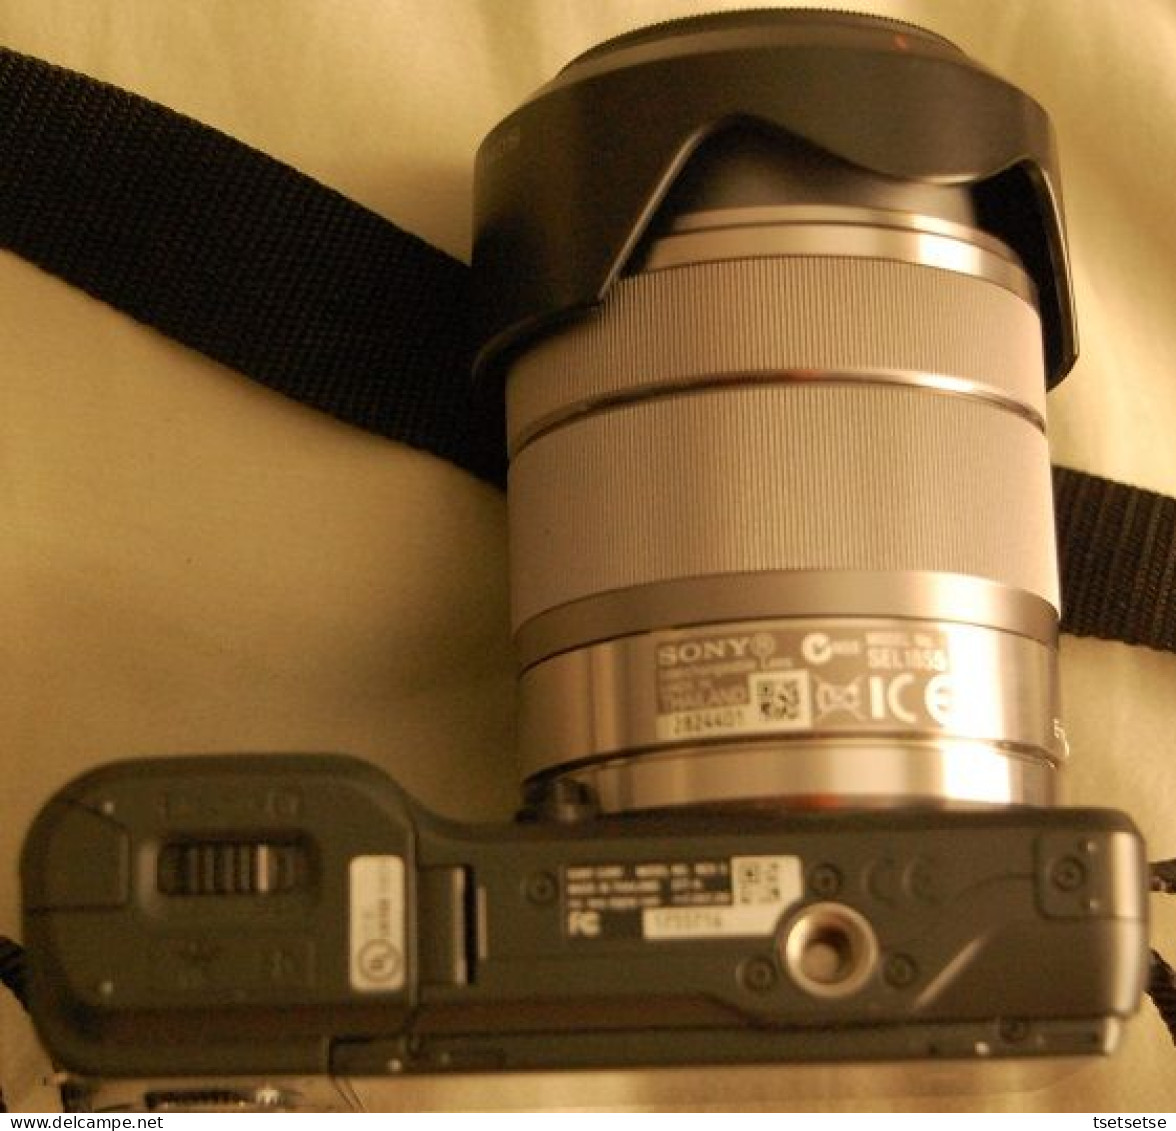 No need spend $2,500+! Sony MIRRORLESS interchange lens video Camera + zoom lens + battery